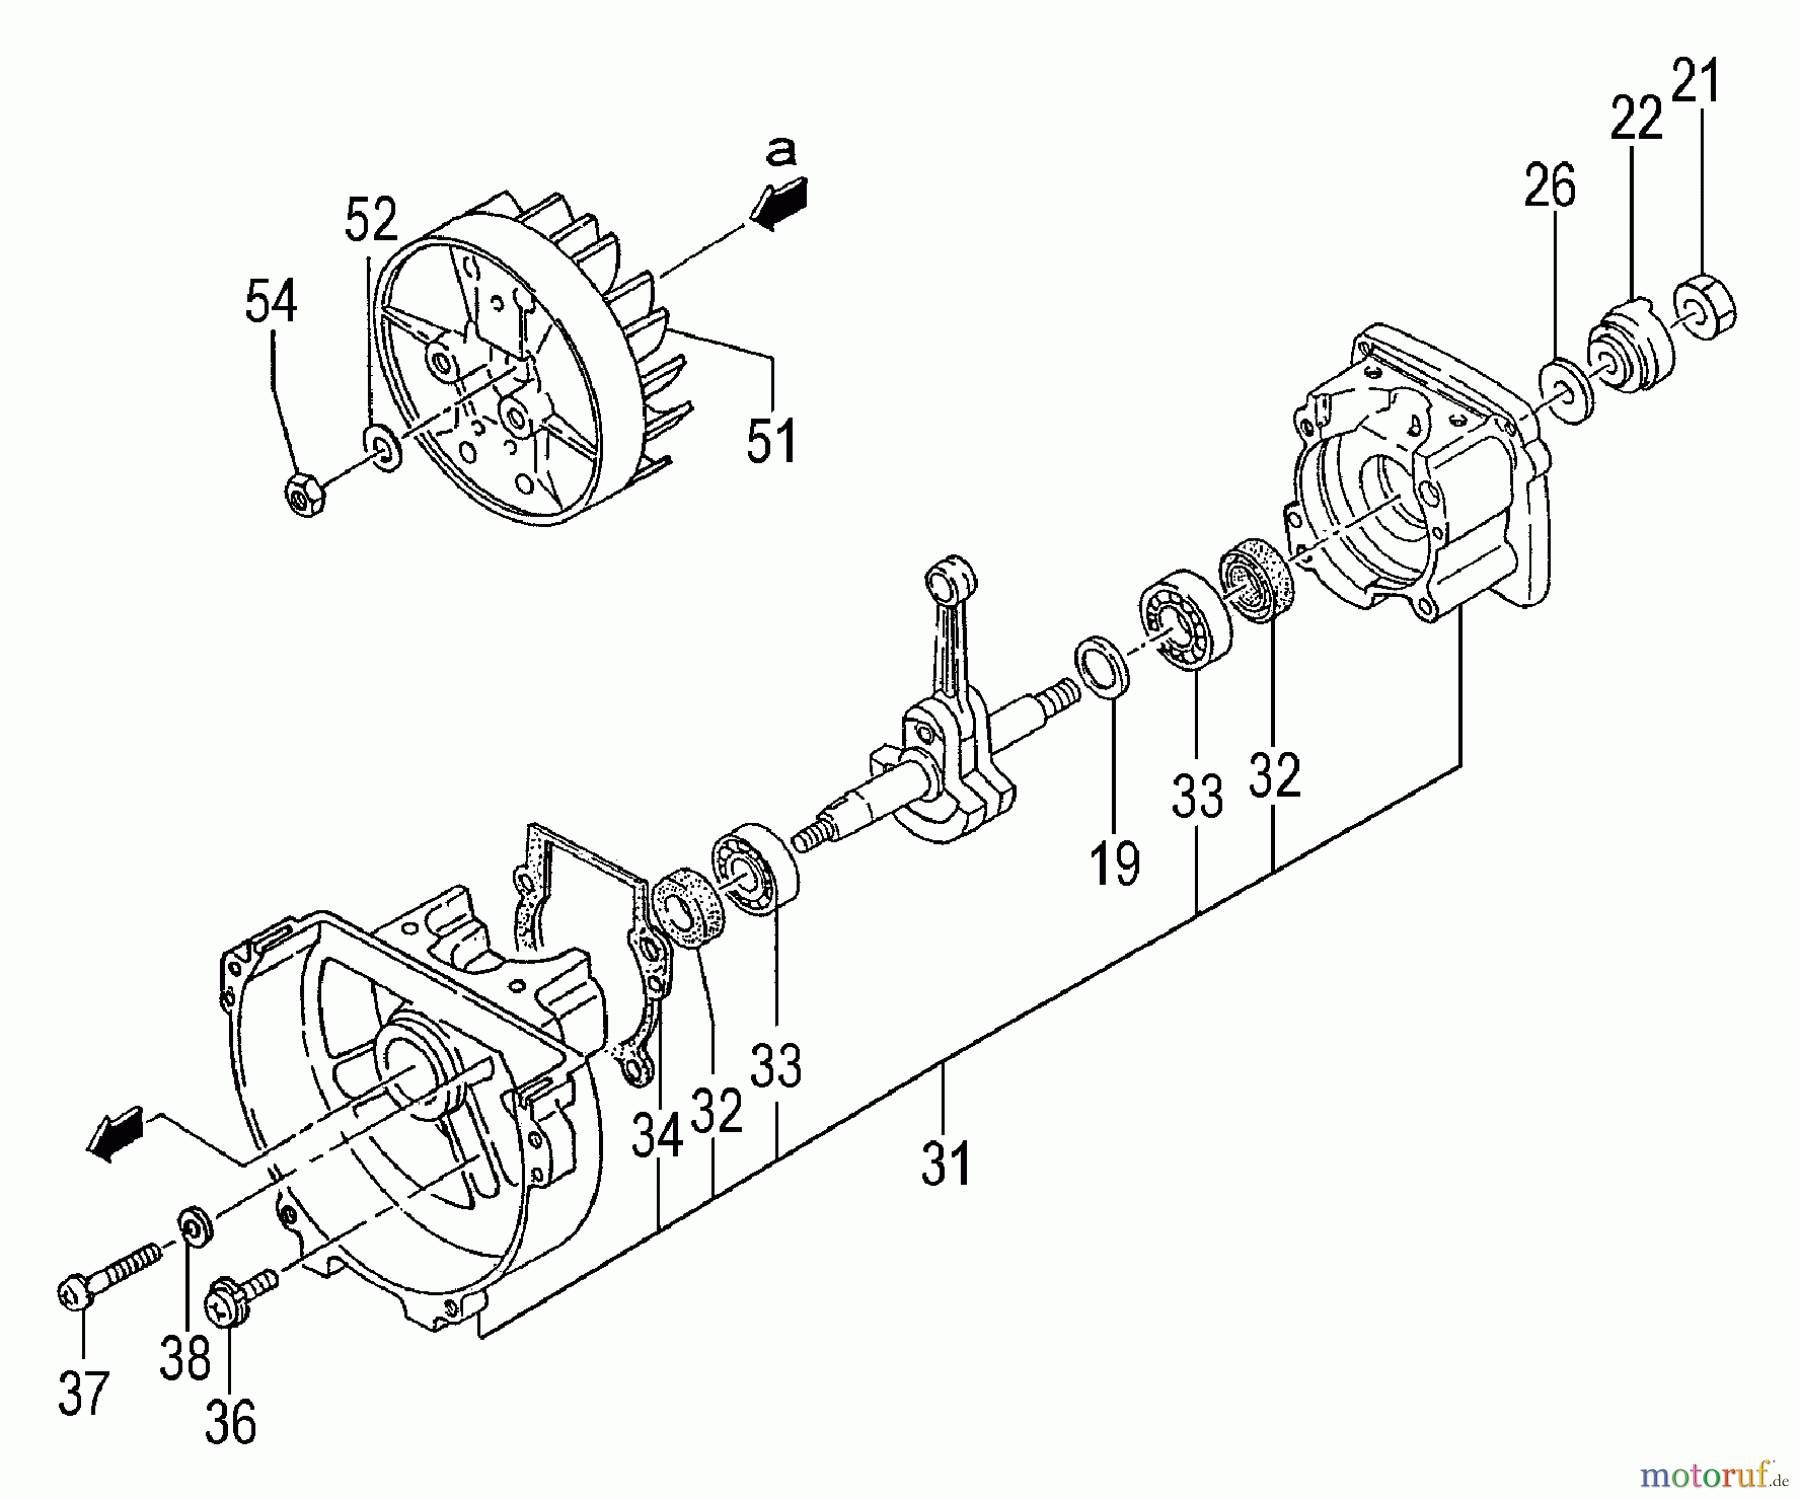  Tanaka Trimmer, Motorsensen TBC-270PND - Tanaka Brush Cutter Flywheel, Starter Pulley, Crankcase, Crankshaft